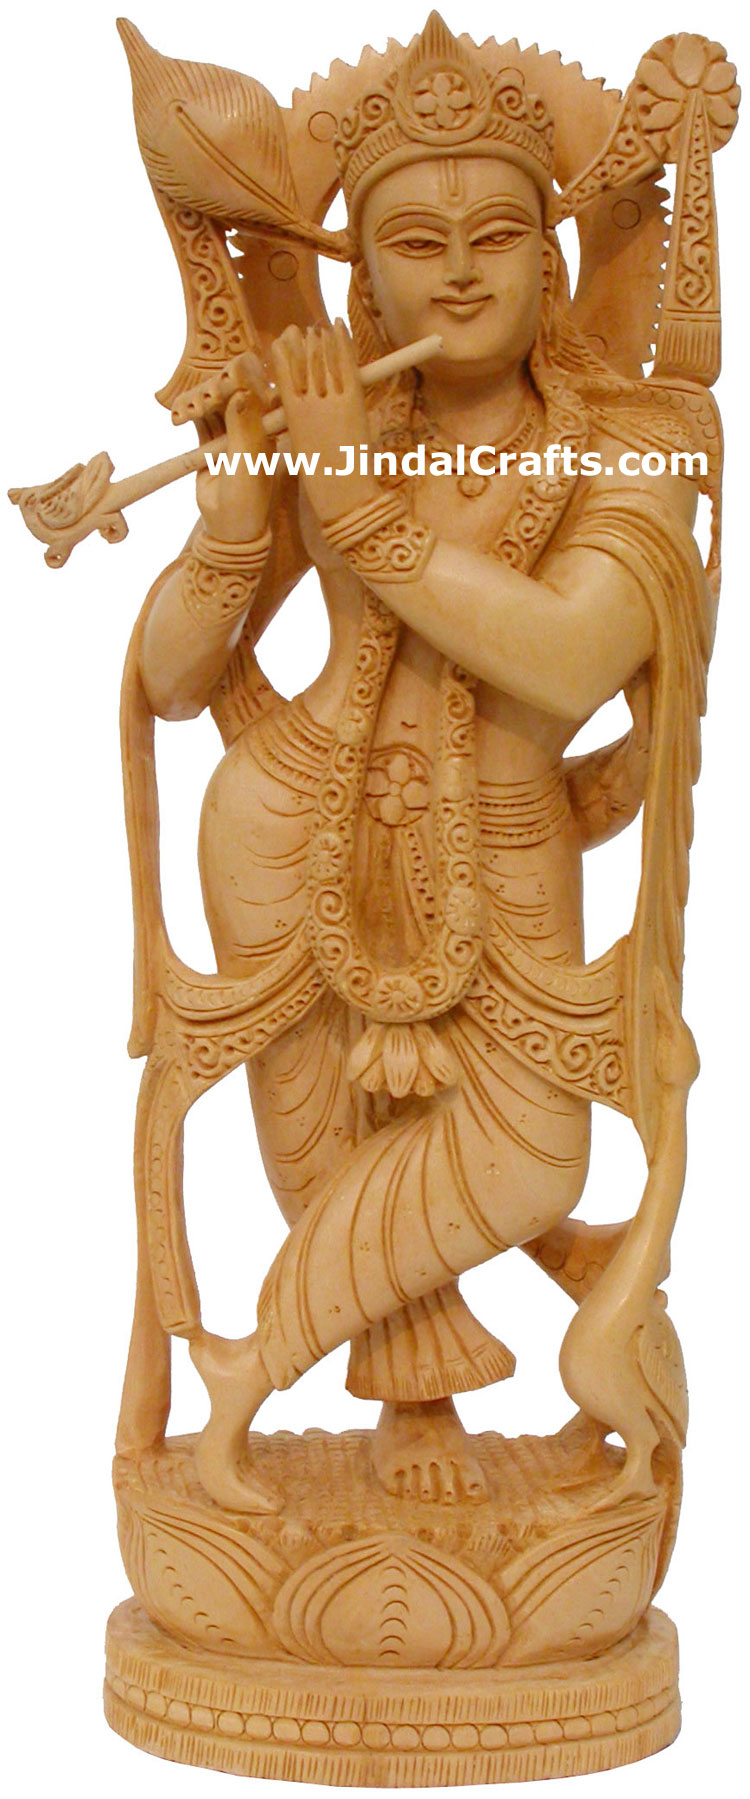 Hindu Deities Lord Krishna India Wood Carving Artifact Hindu Religious Decor Art